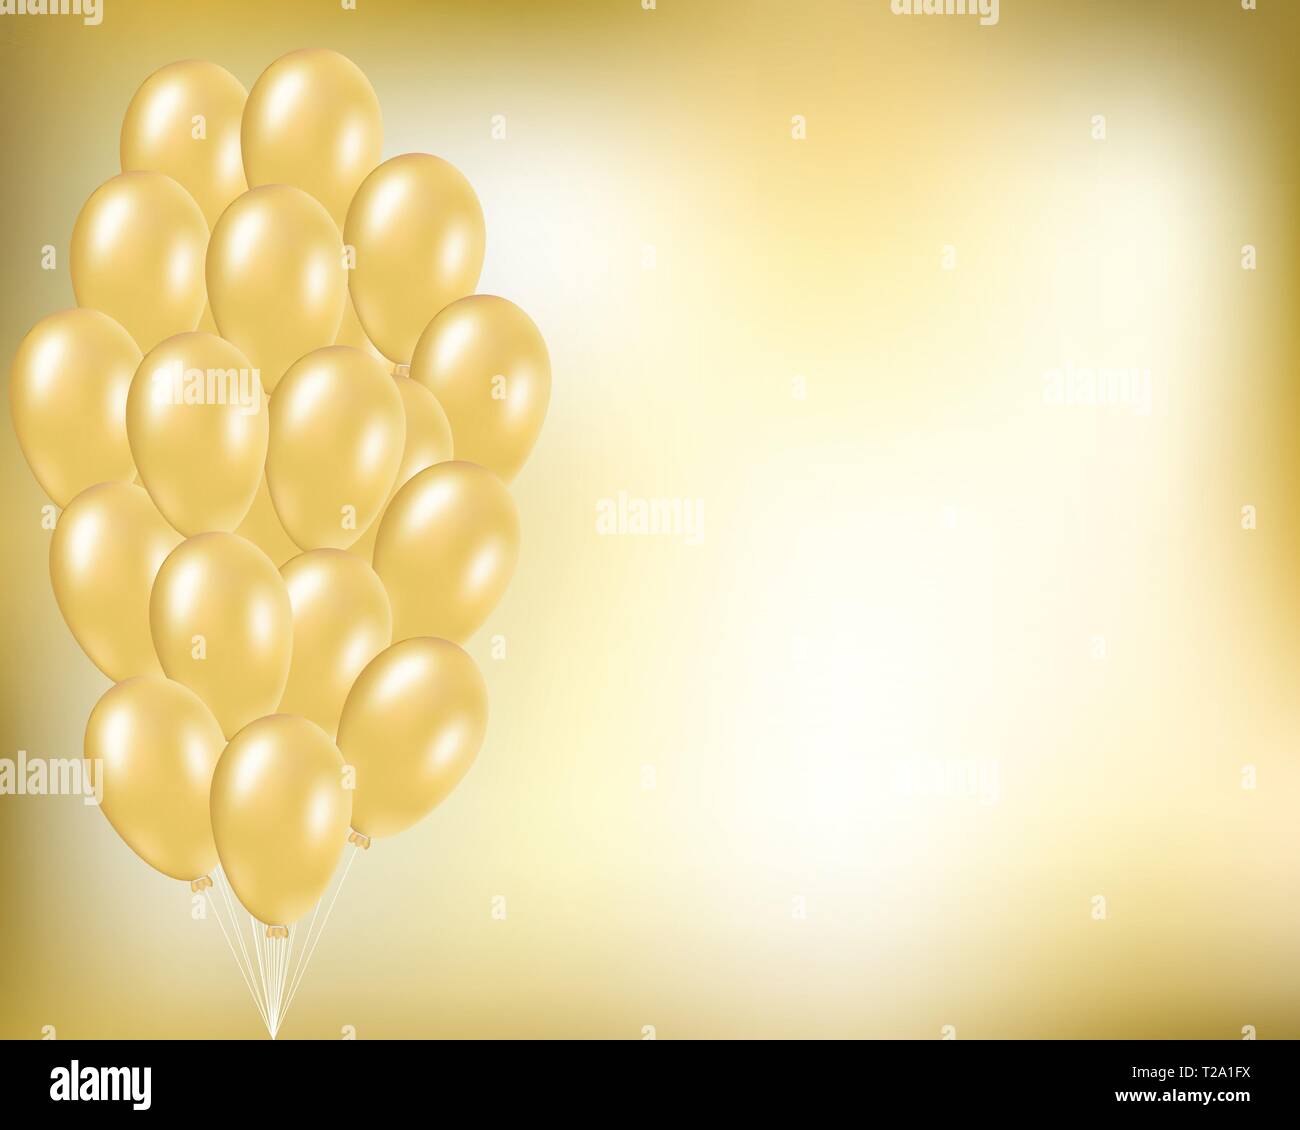 Free Vector  Happy birthday ribbon with golden balloons